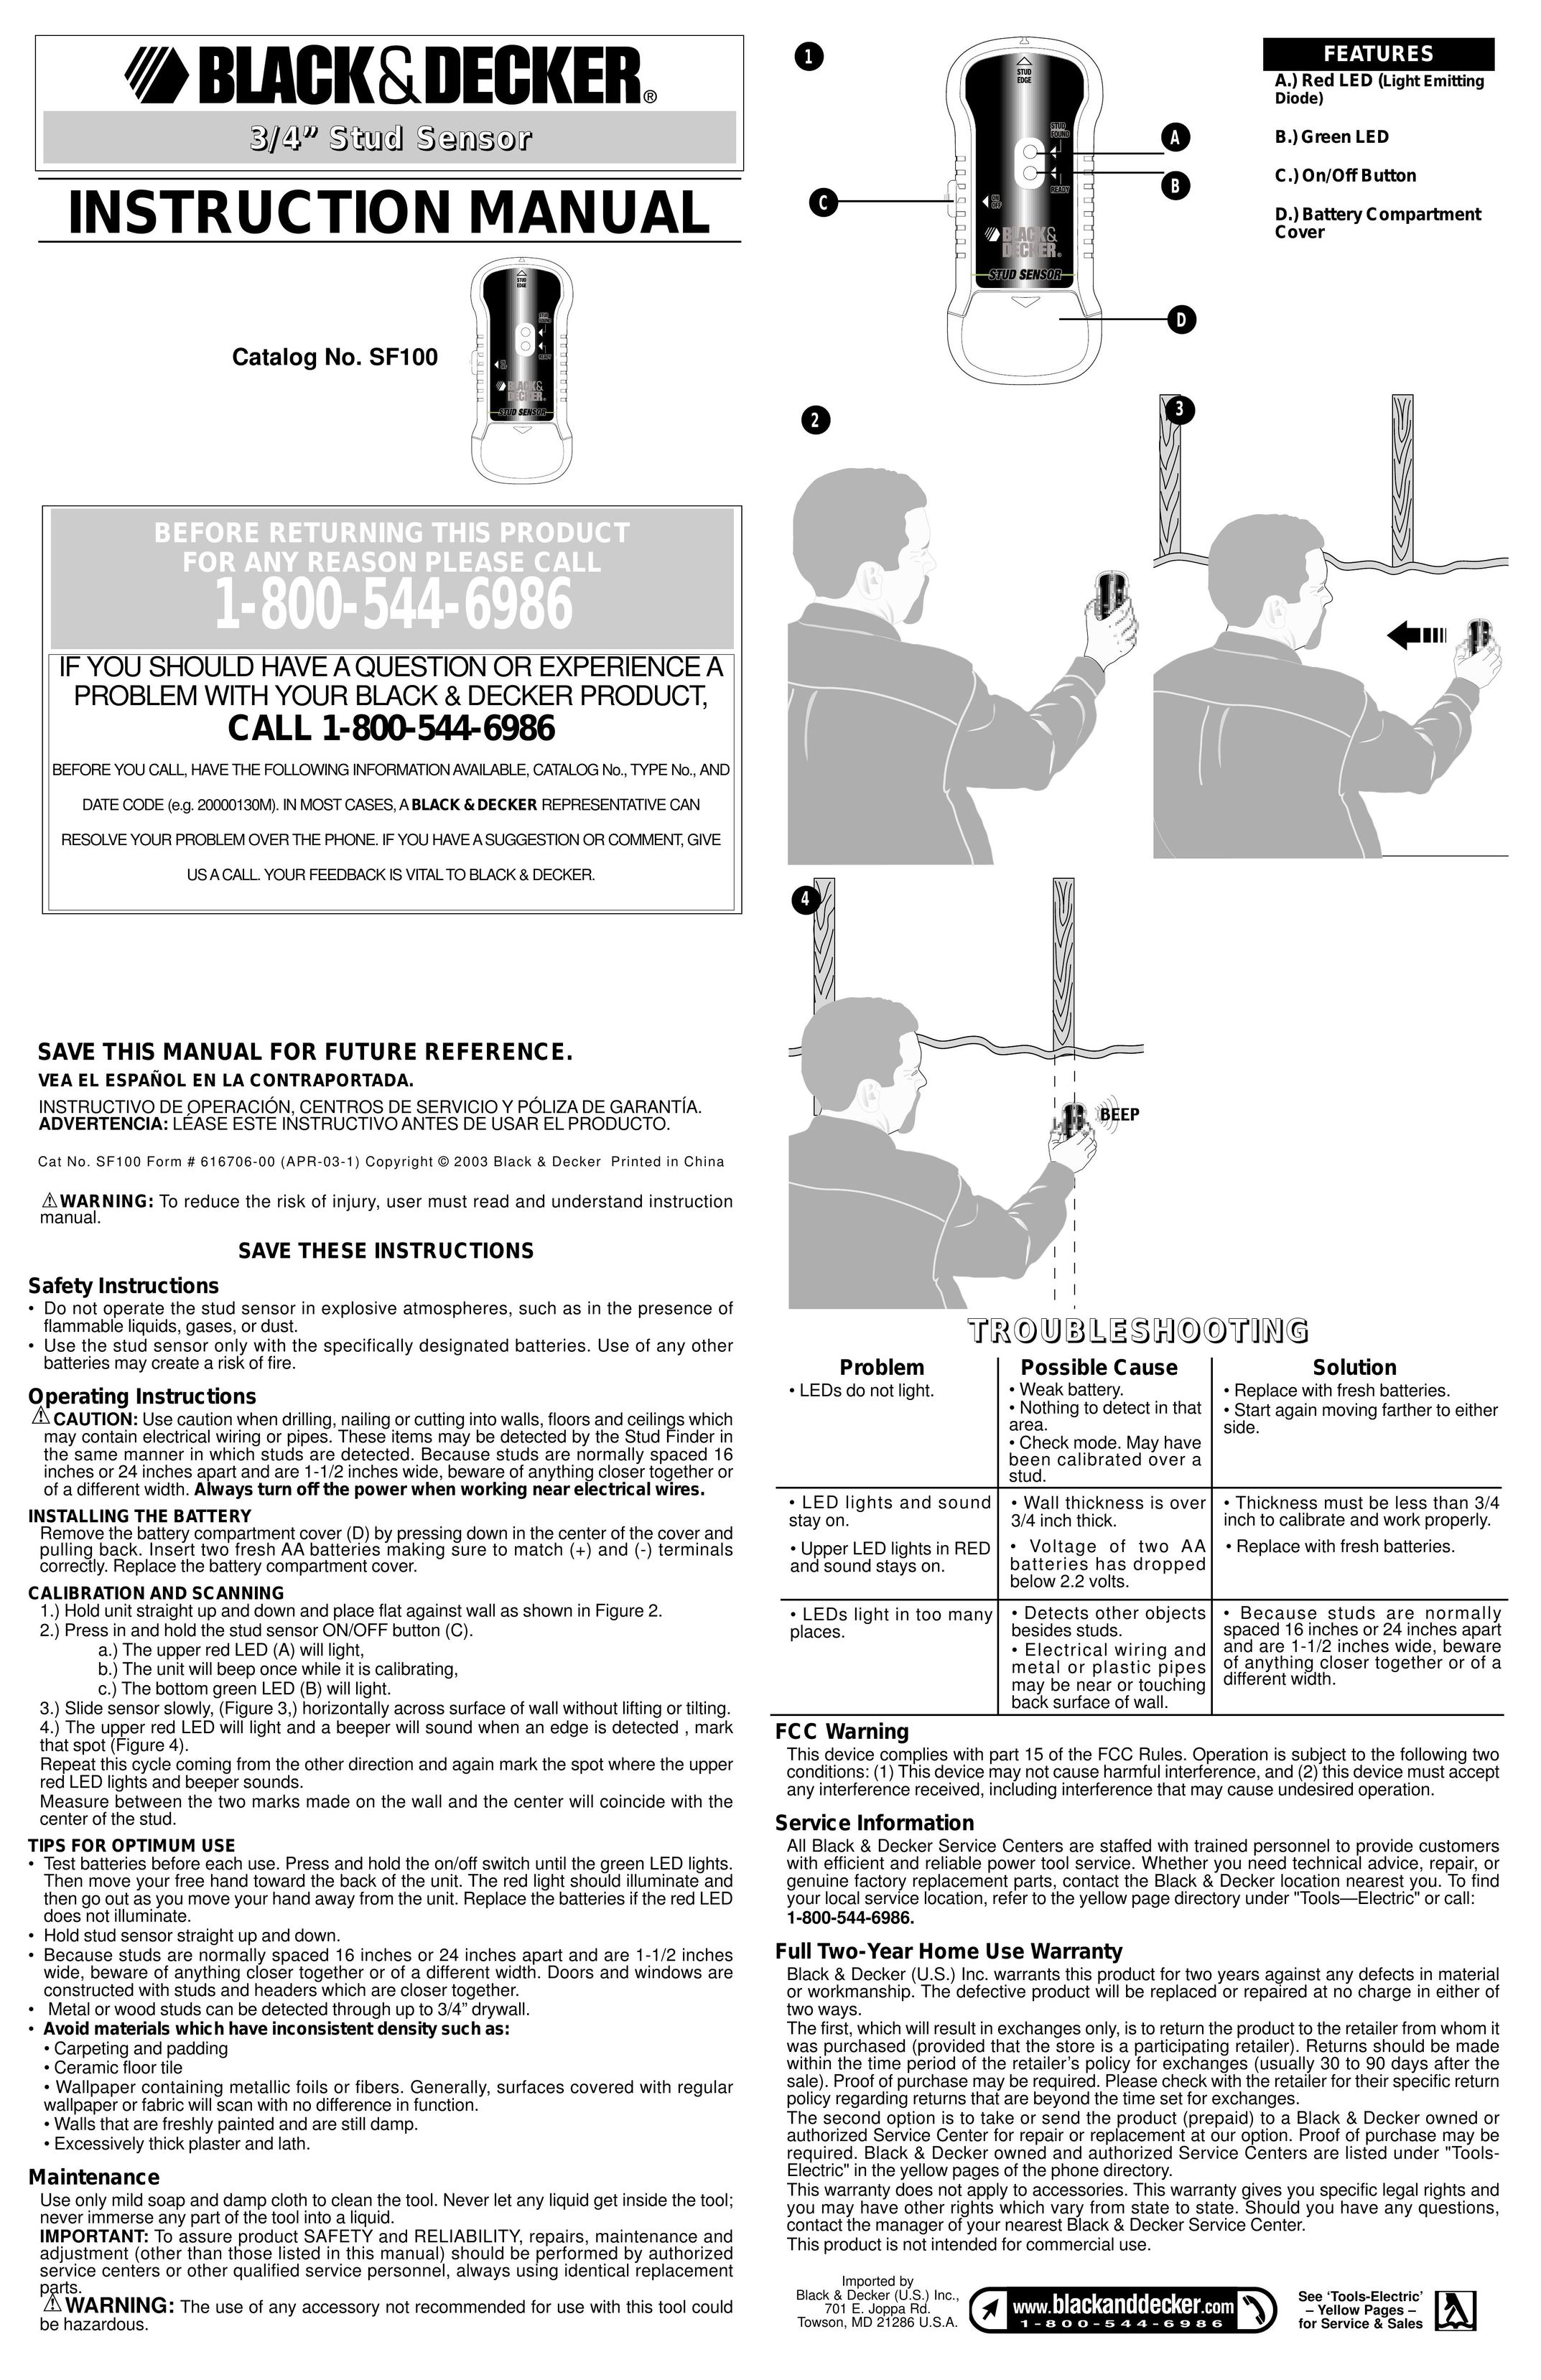 Black & Decker SF100 Stud Sensor User Manual